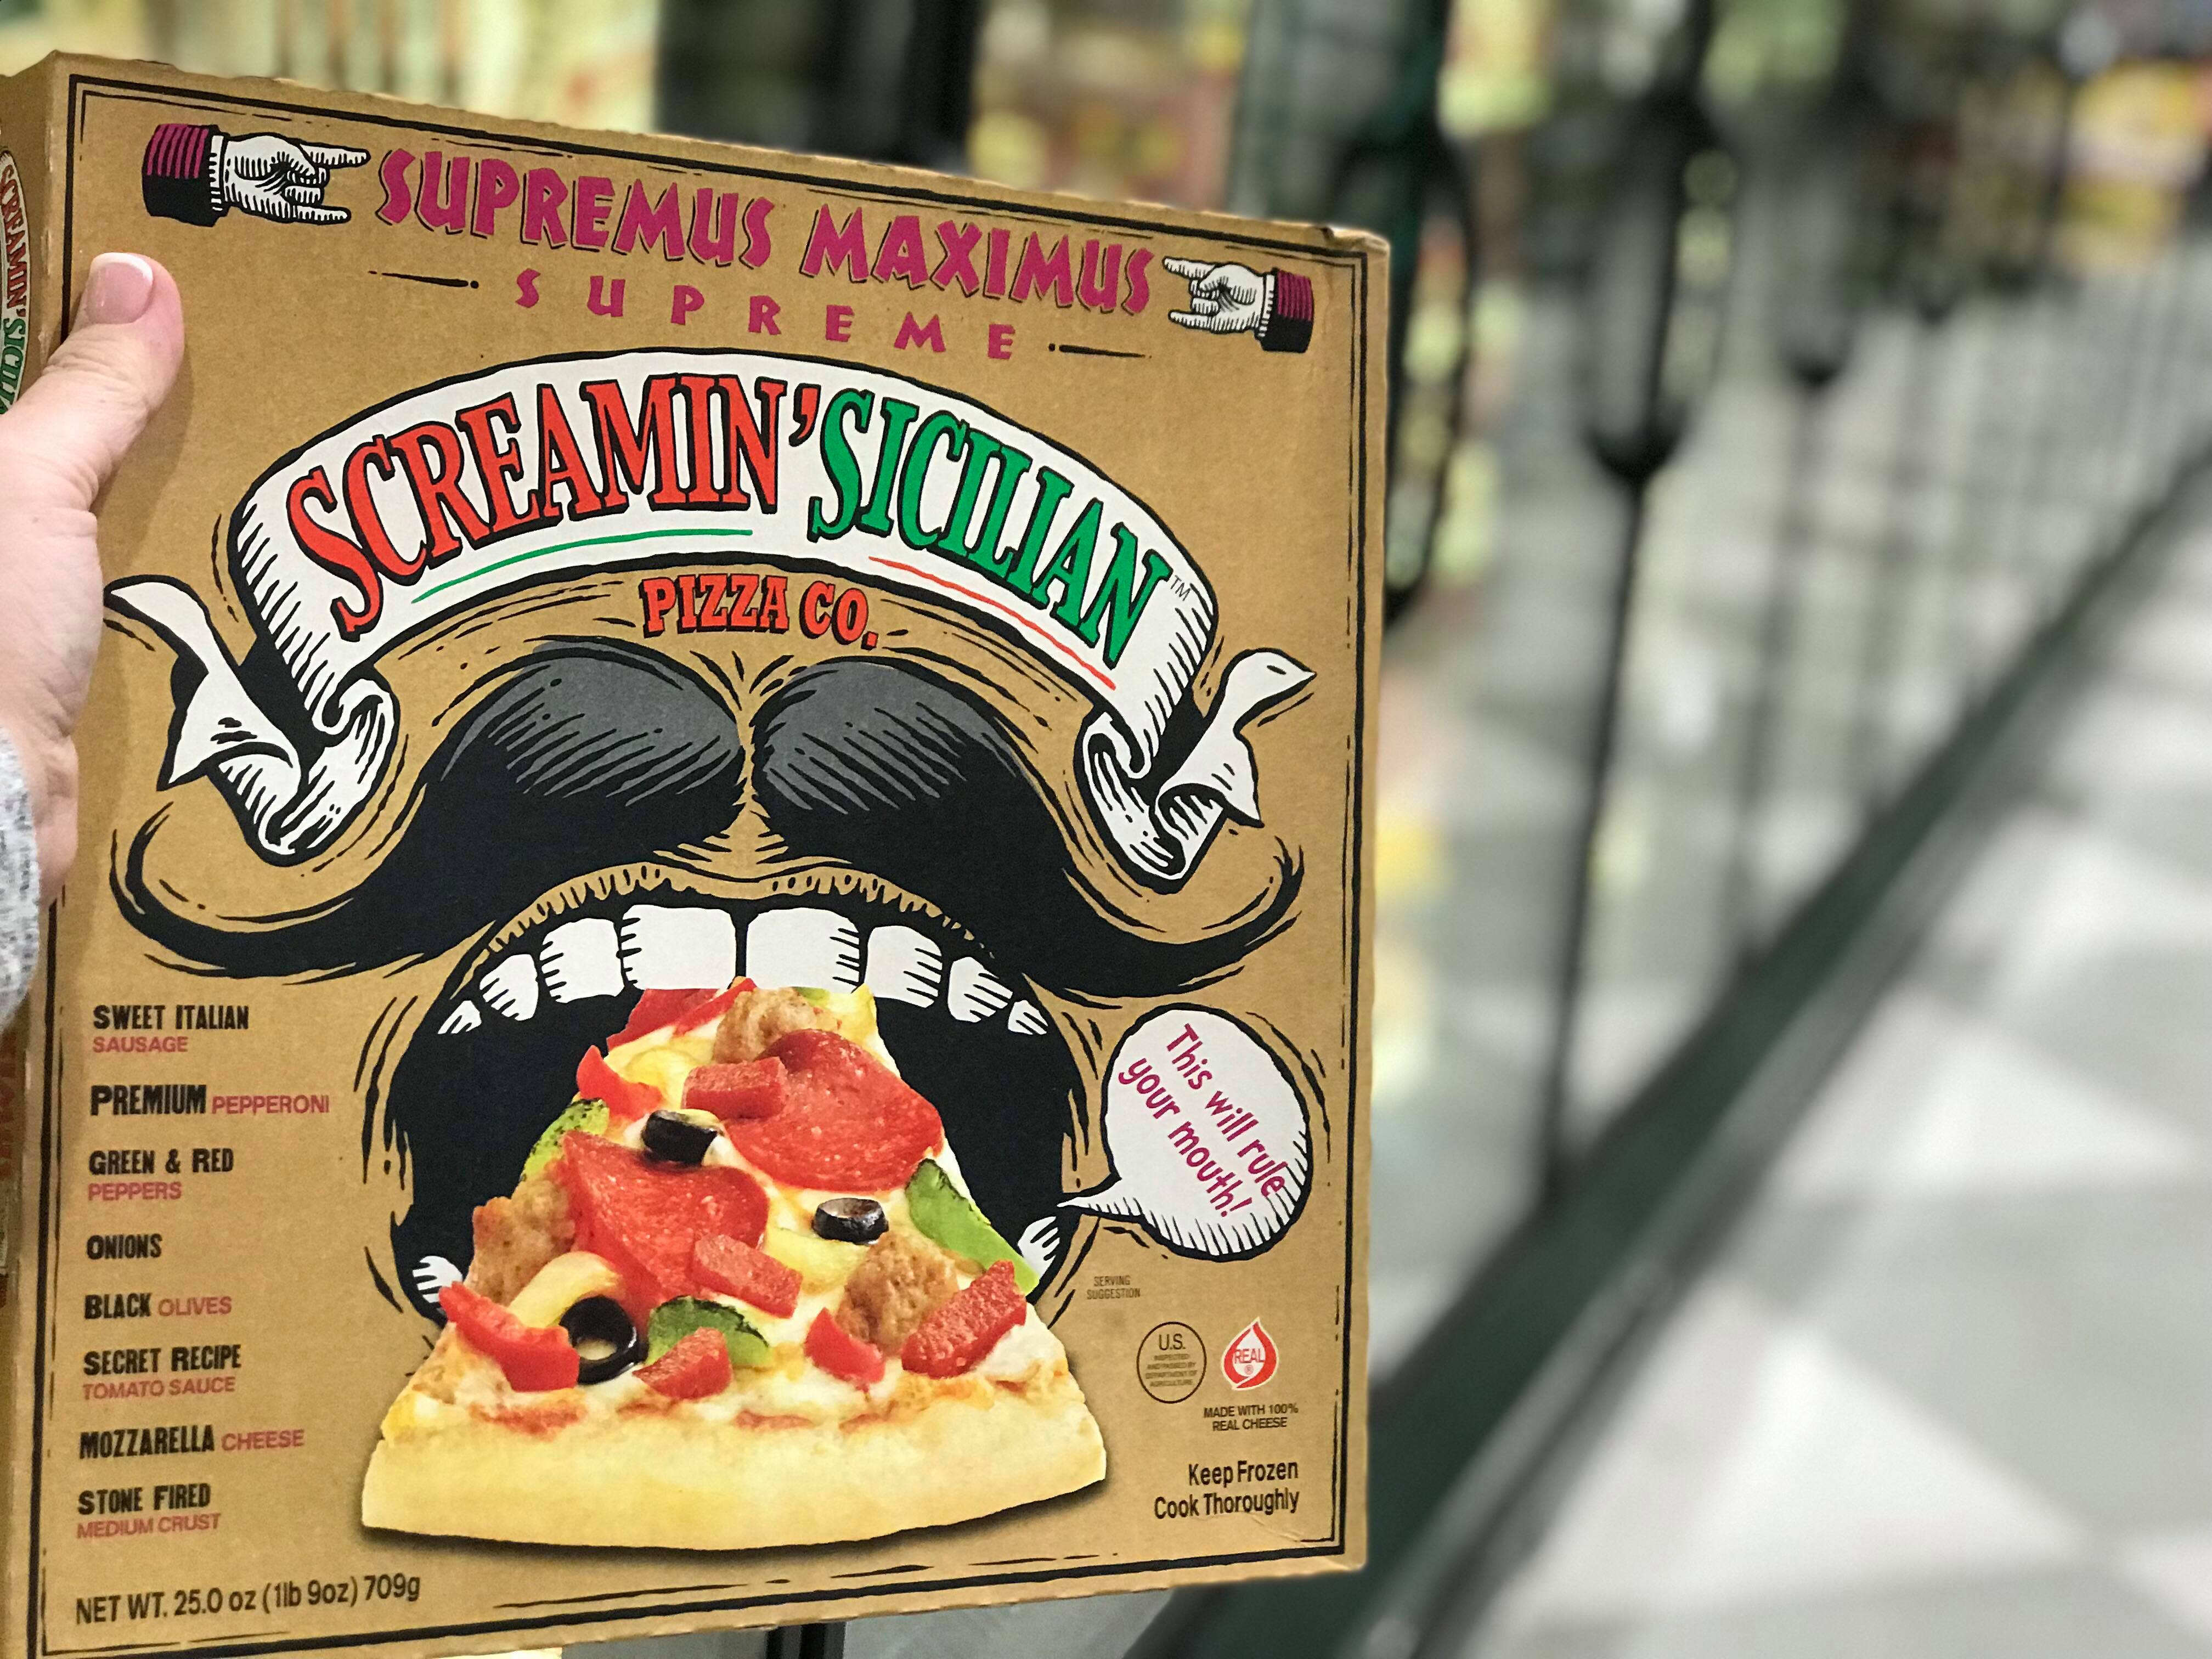 NEW Rare 2.00 OFF Screamin Sicilian Pizza Coupon! The Harris Teeter